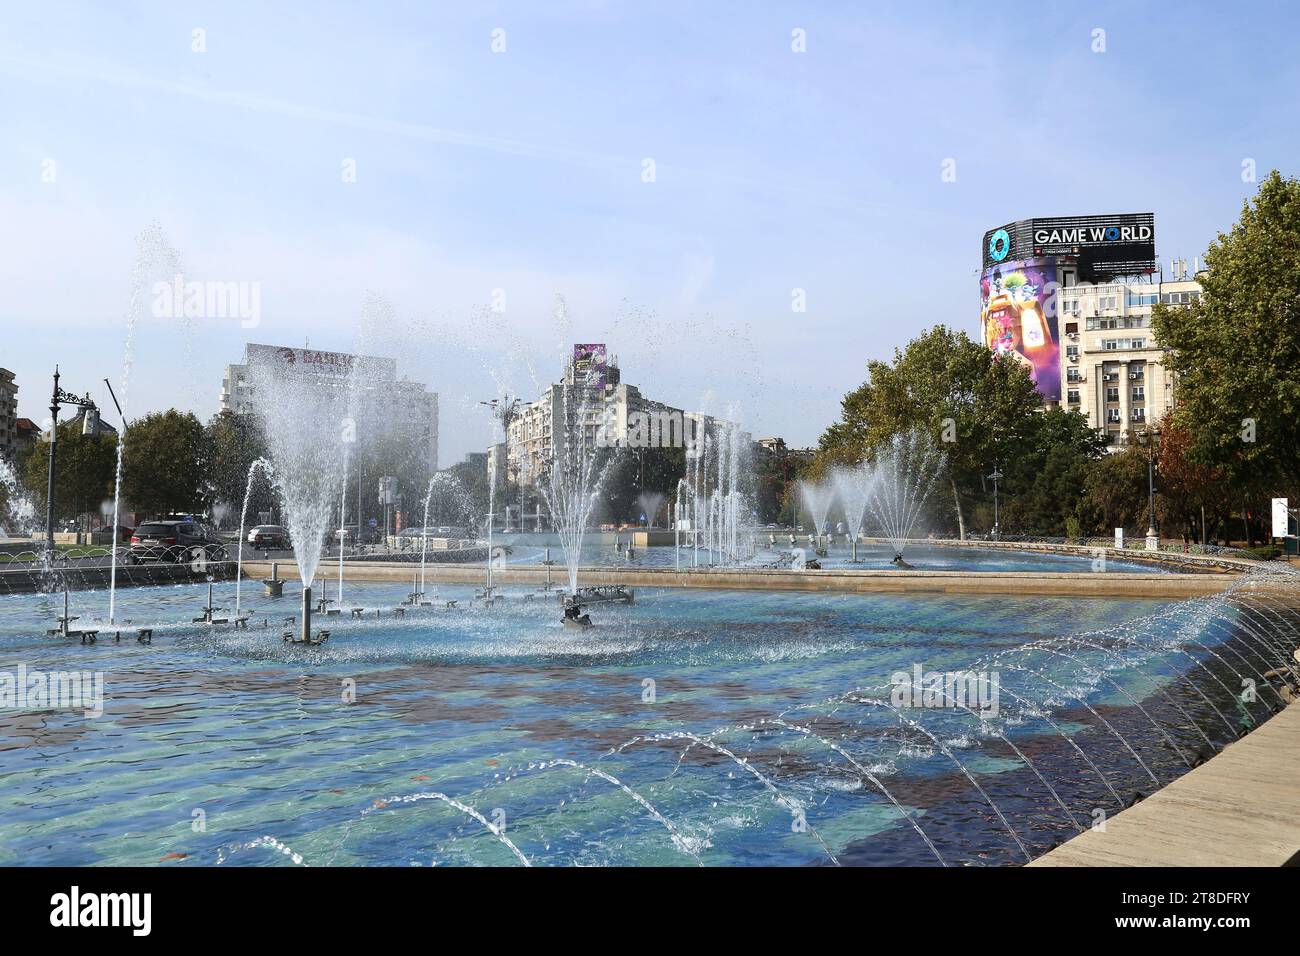 Piața Unirii (Union Square), Civic Centre, Historic Centre, Bucharest, Municipality of Bucharest, Romania, Europe Stock Photo